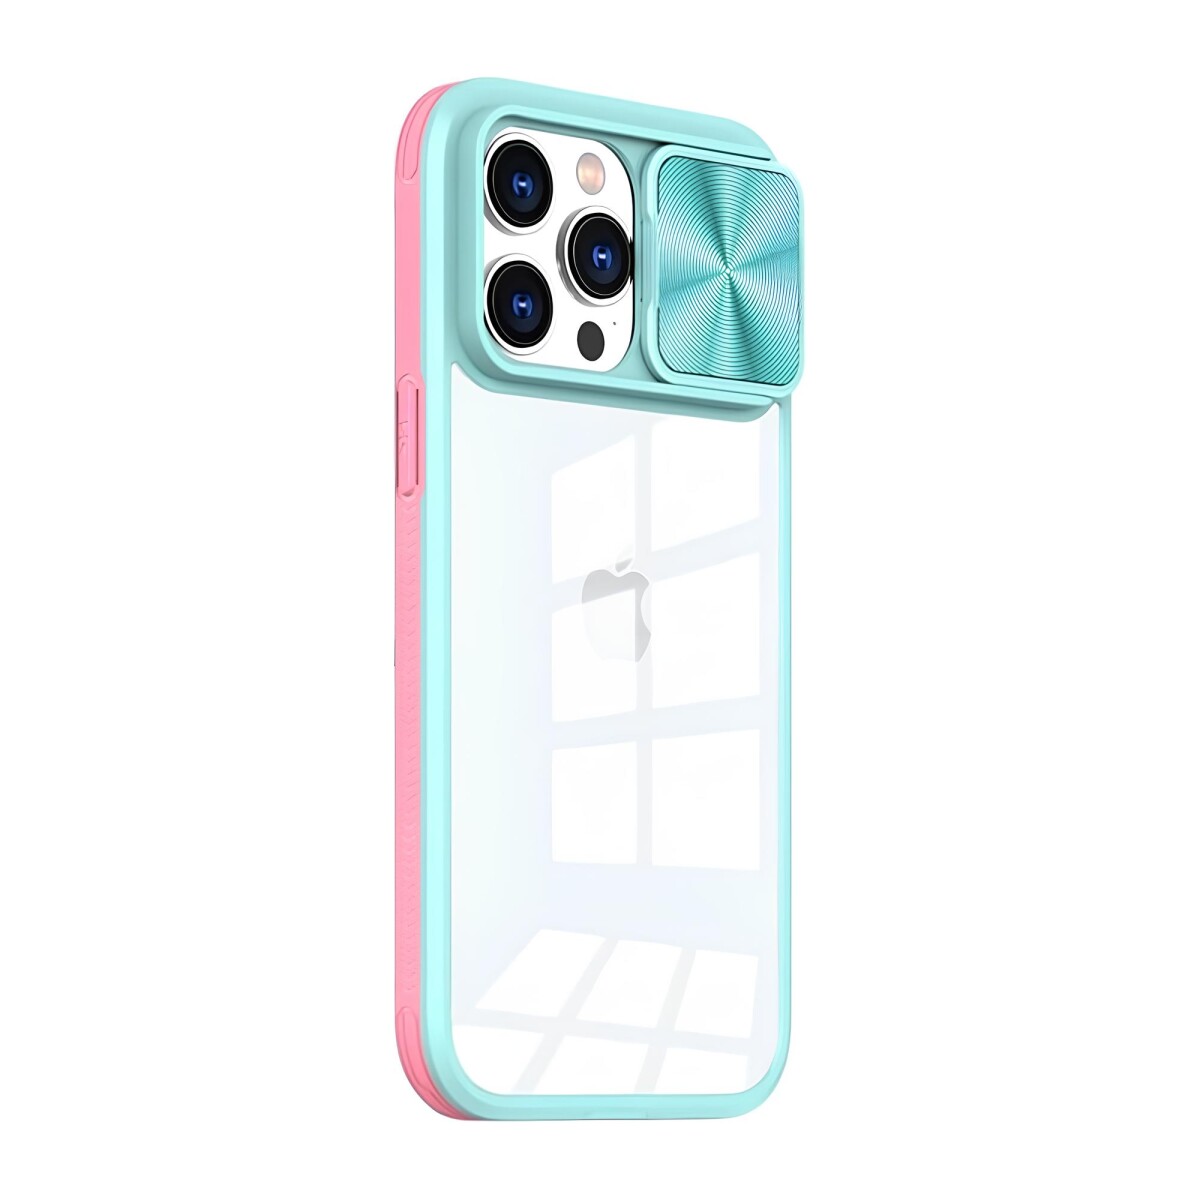 Protector Case con Protector de Cámara Slide para iPhone 11 - Sky blue+pink 